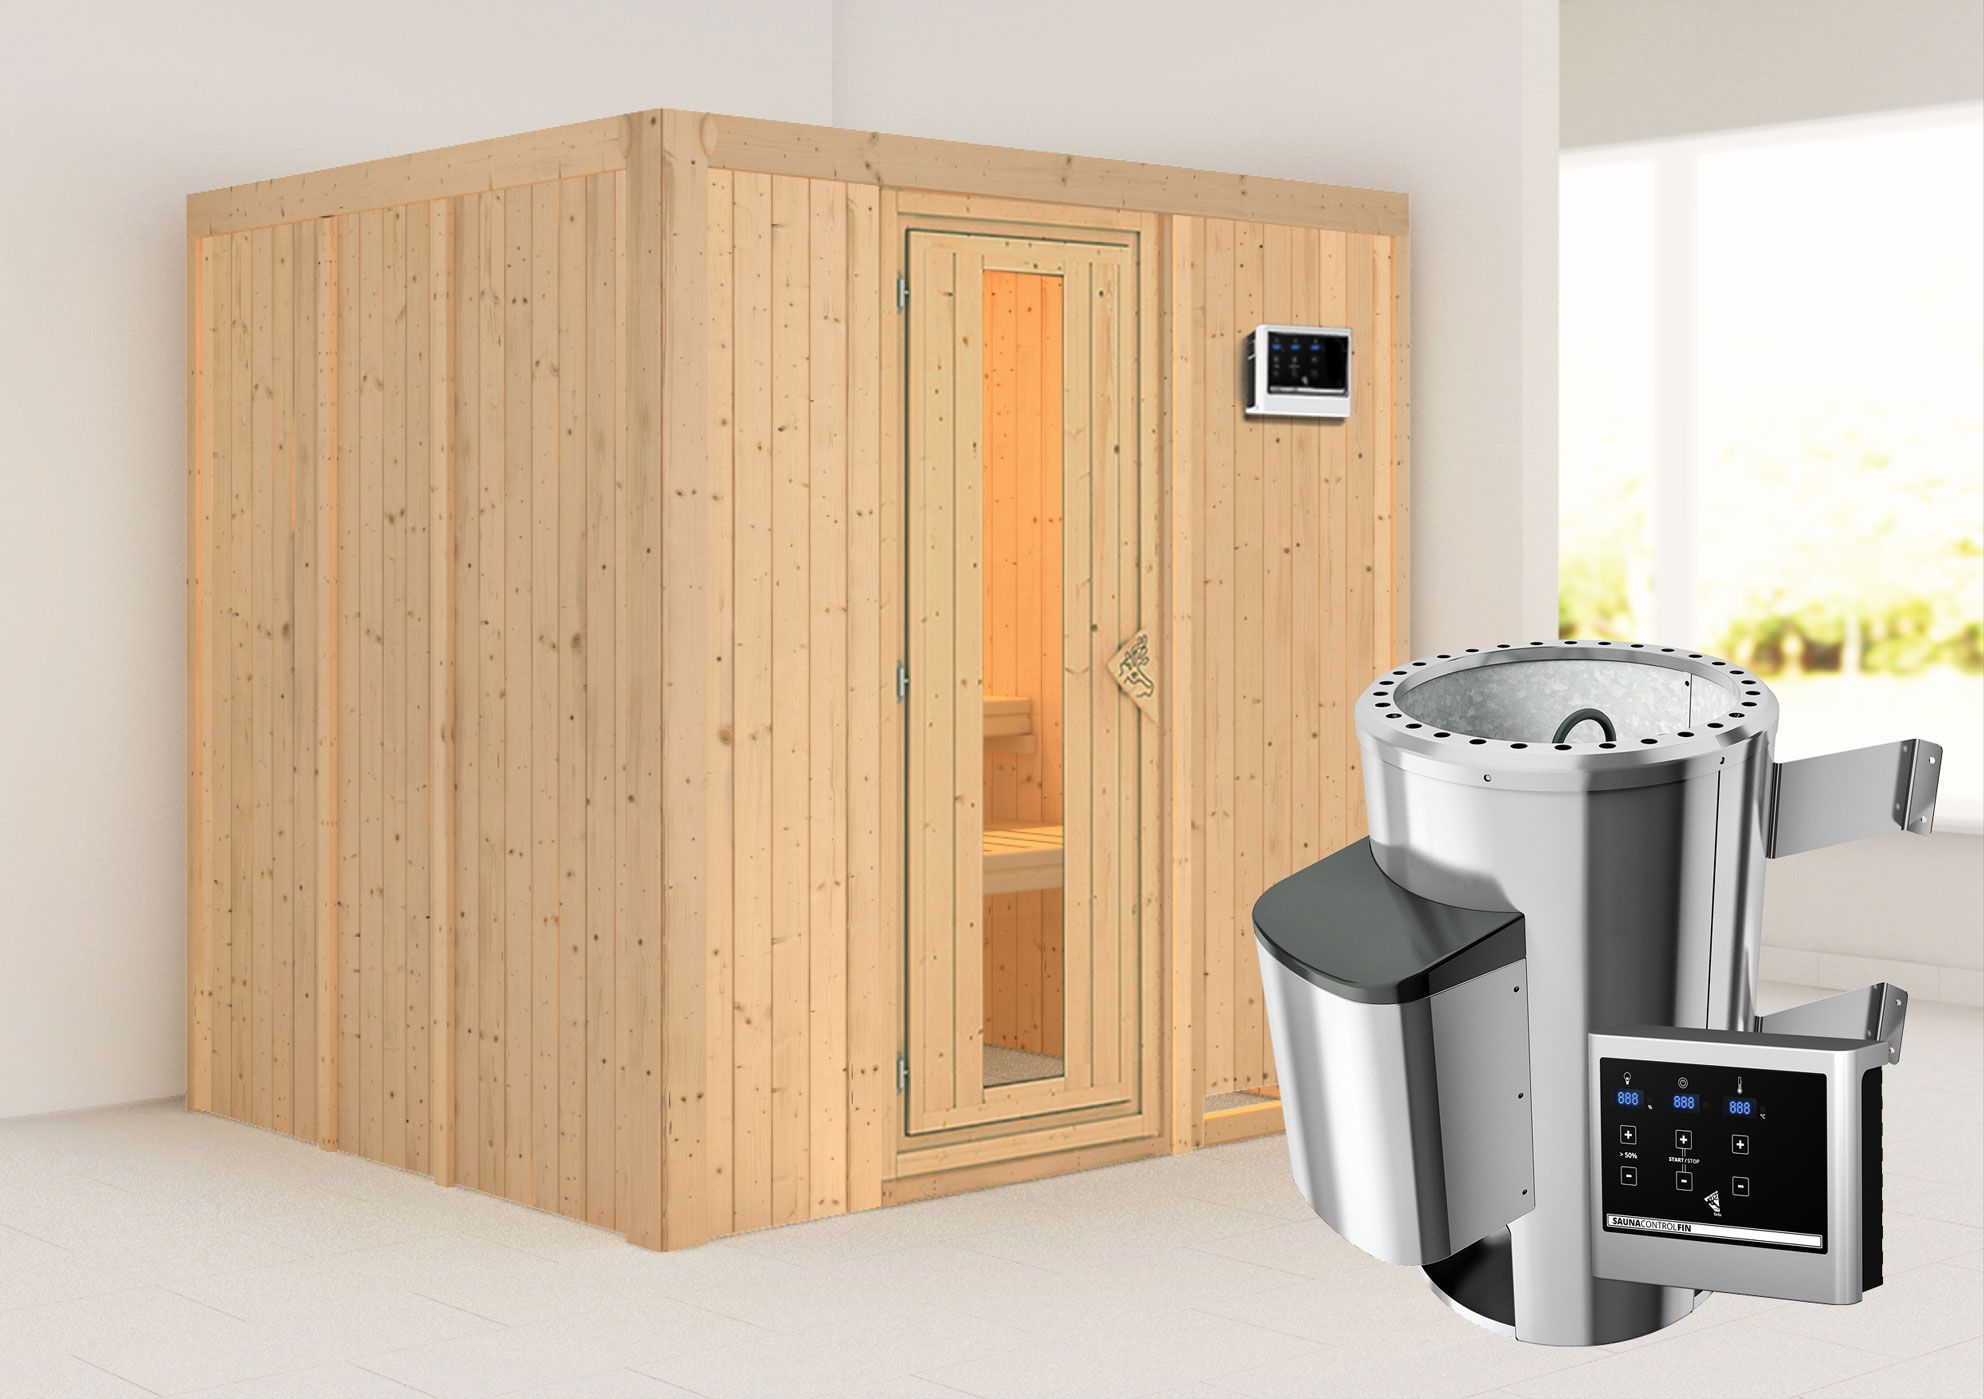 Sauna "Agnar" SET met energiebesparende deur - kleur: naturel, kachel externe regeling eenvoudig 3,6 kW - 196 x 170 x 198 cm (B x D x H)